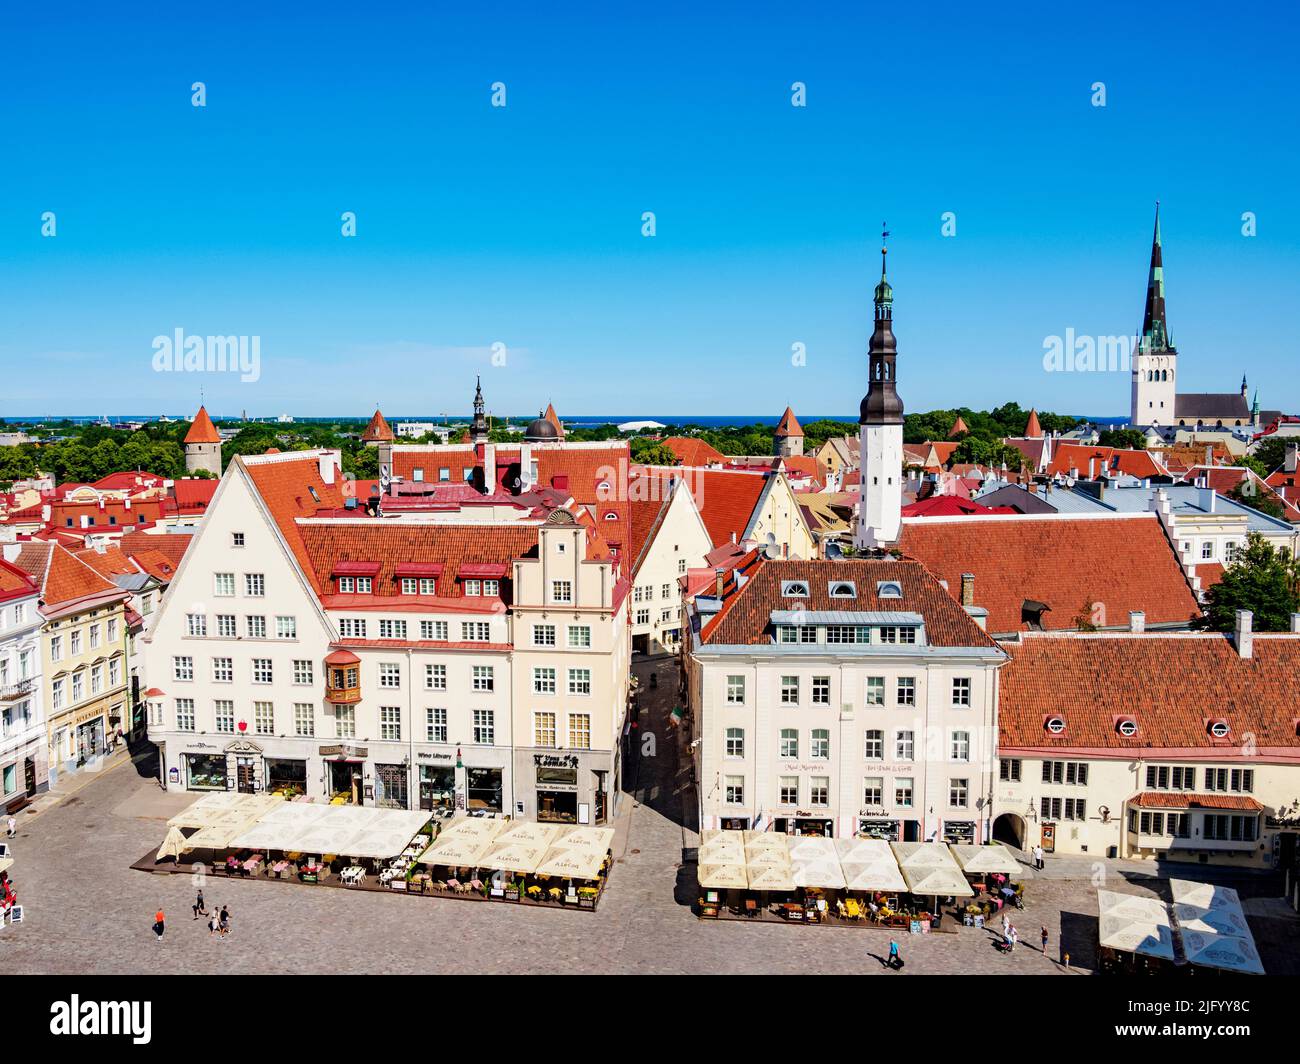 Raekoja plats, Old Town Market Square, elevated view, UNESCO World Heritage Site, Tallinn, Estonia, Europe Stock Photo